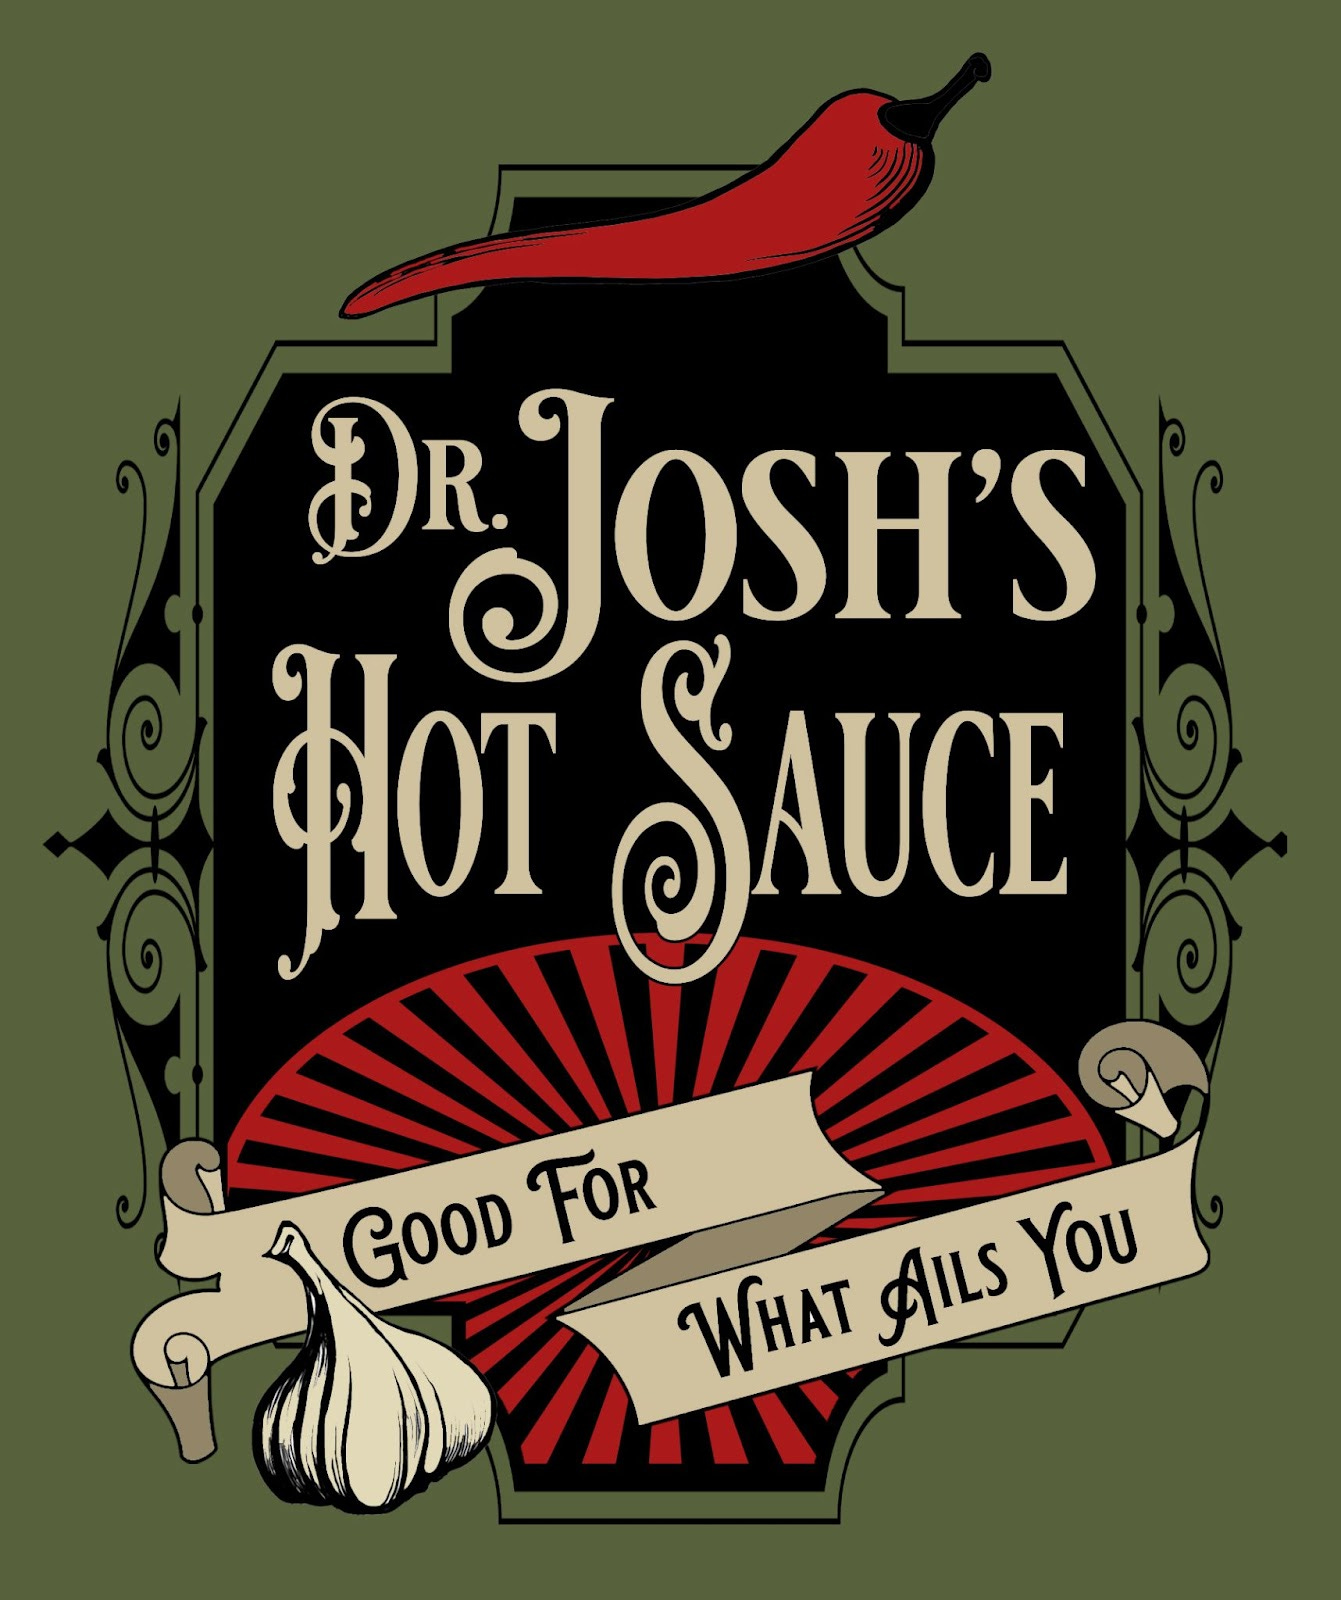 Dr. Josh's Hot Sauce label